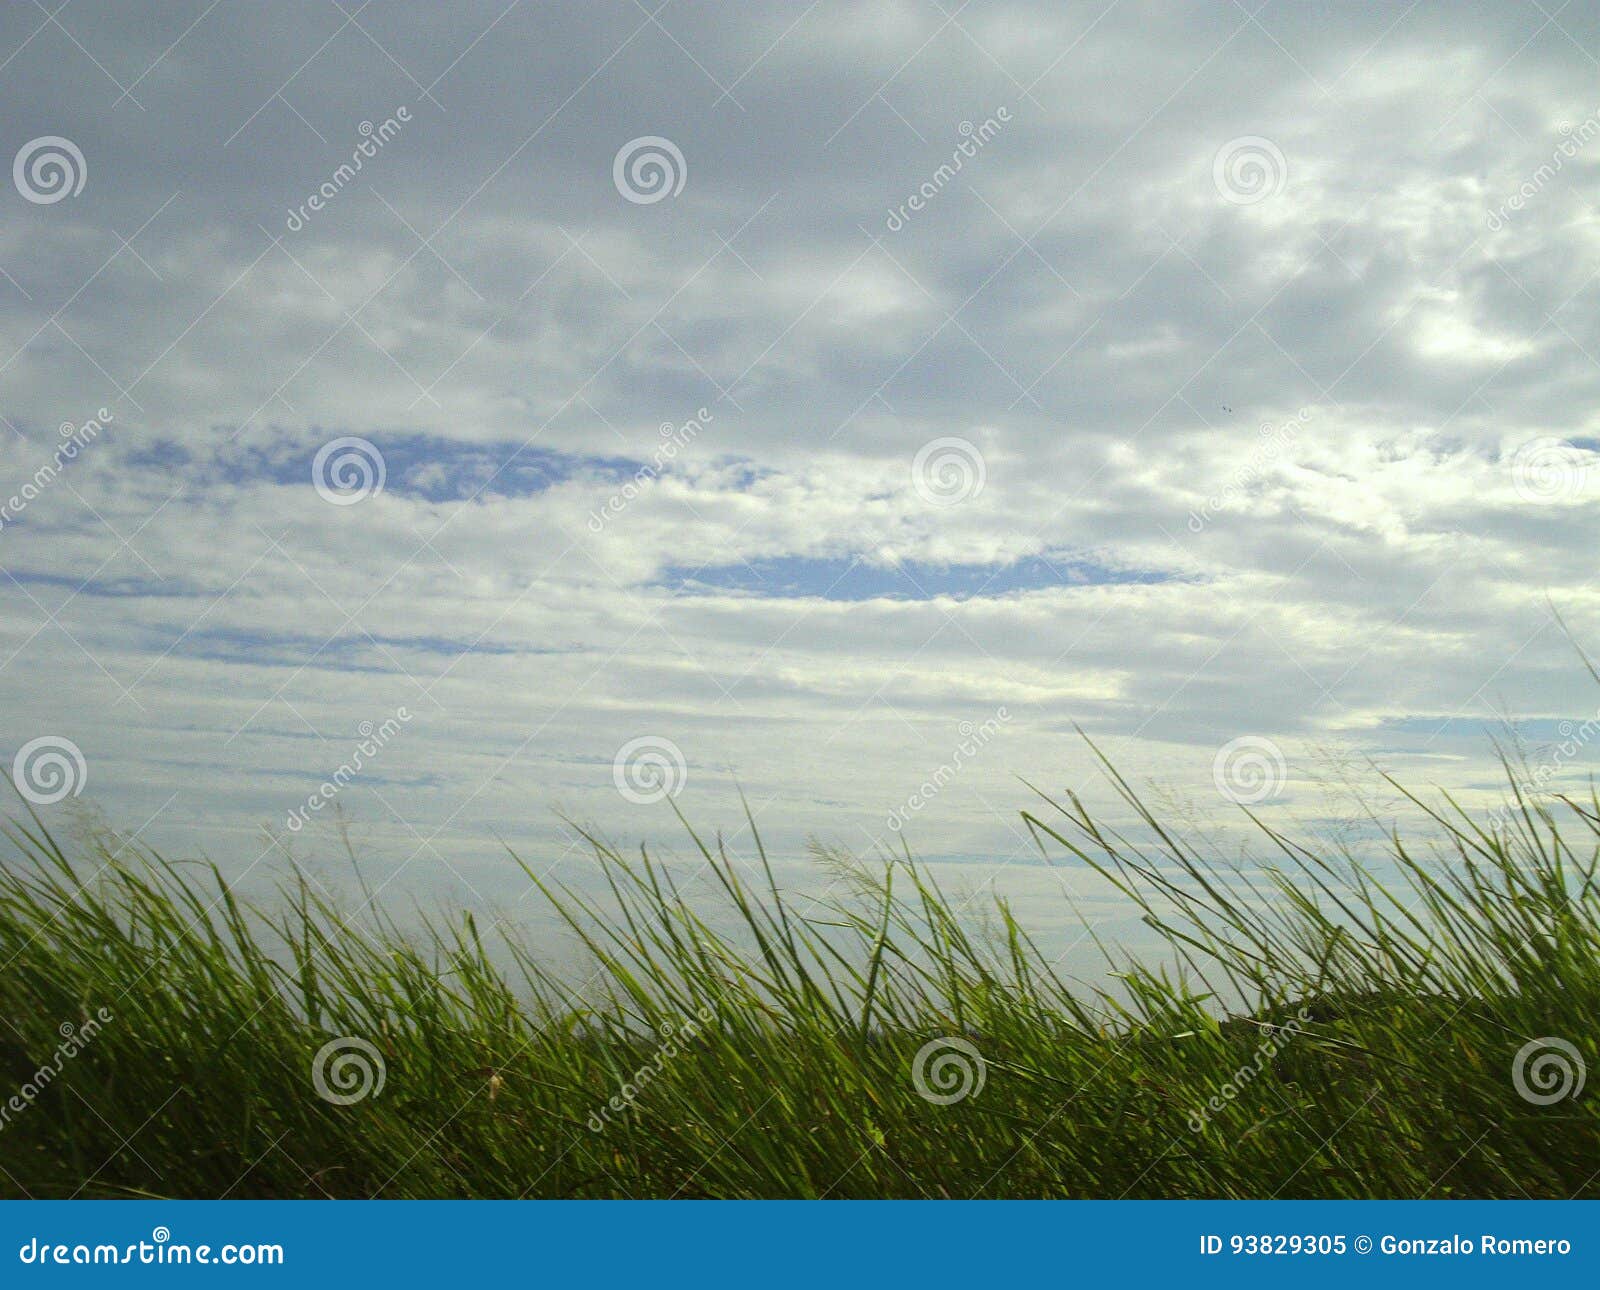 grass wind and sky